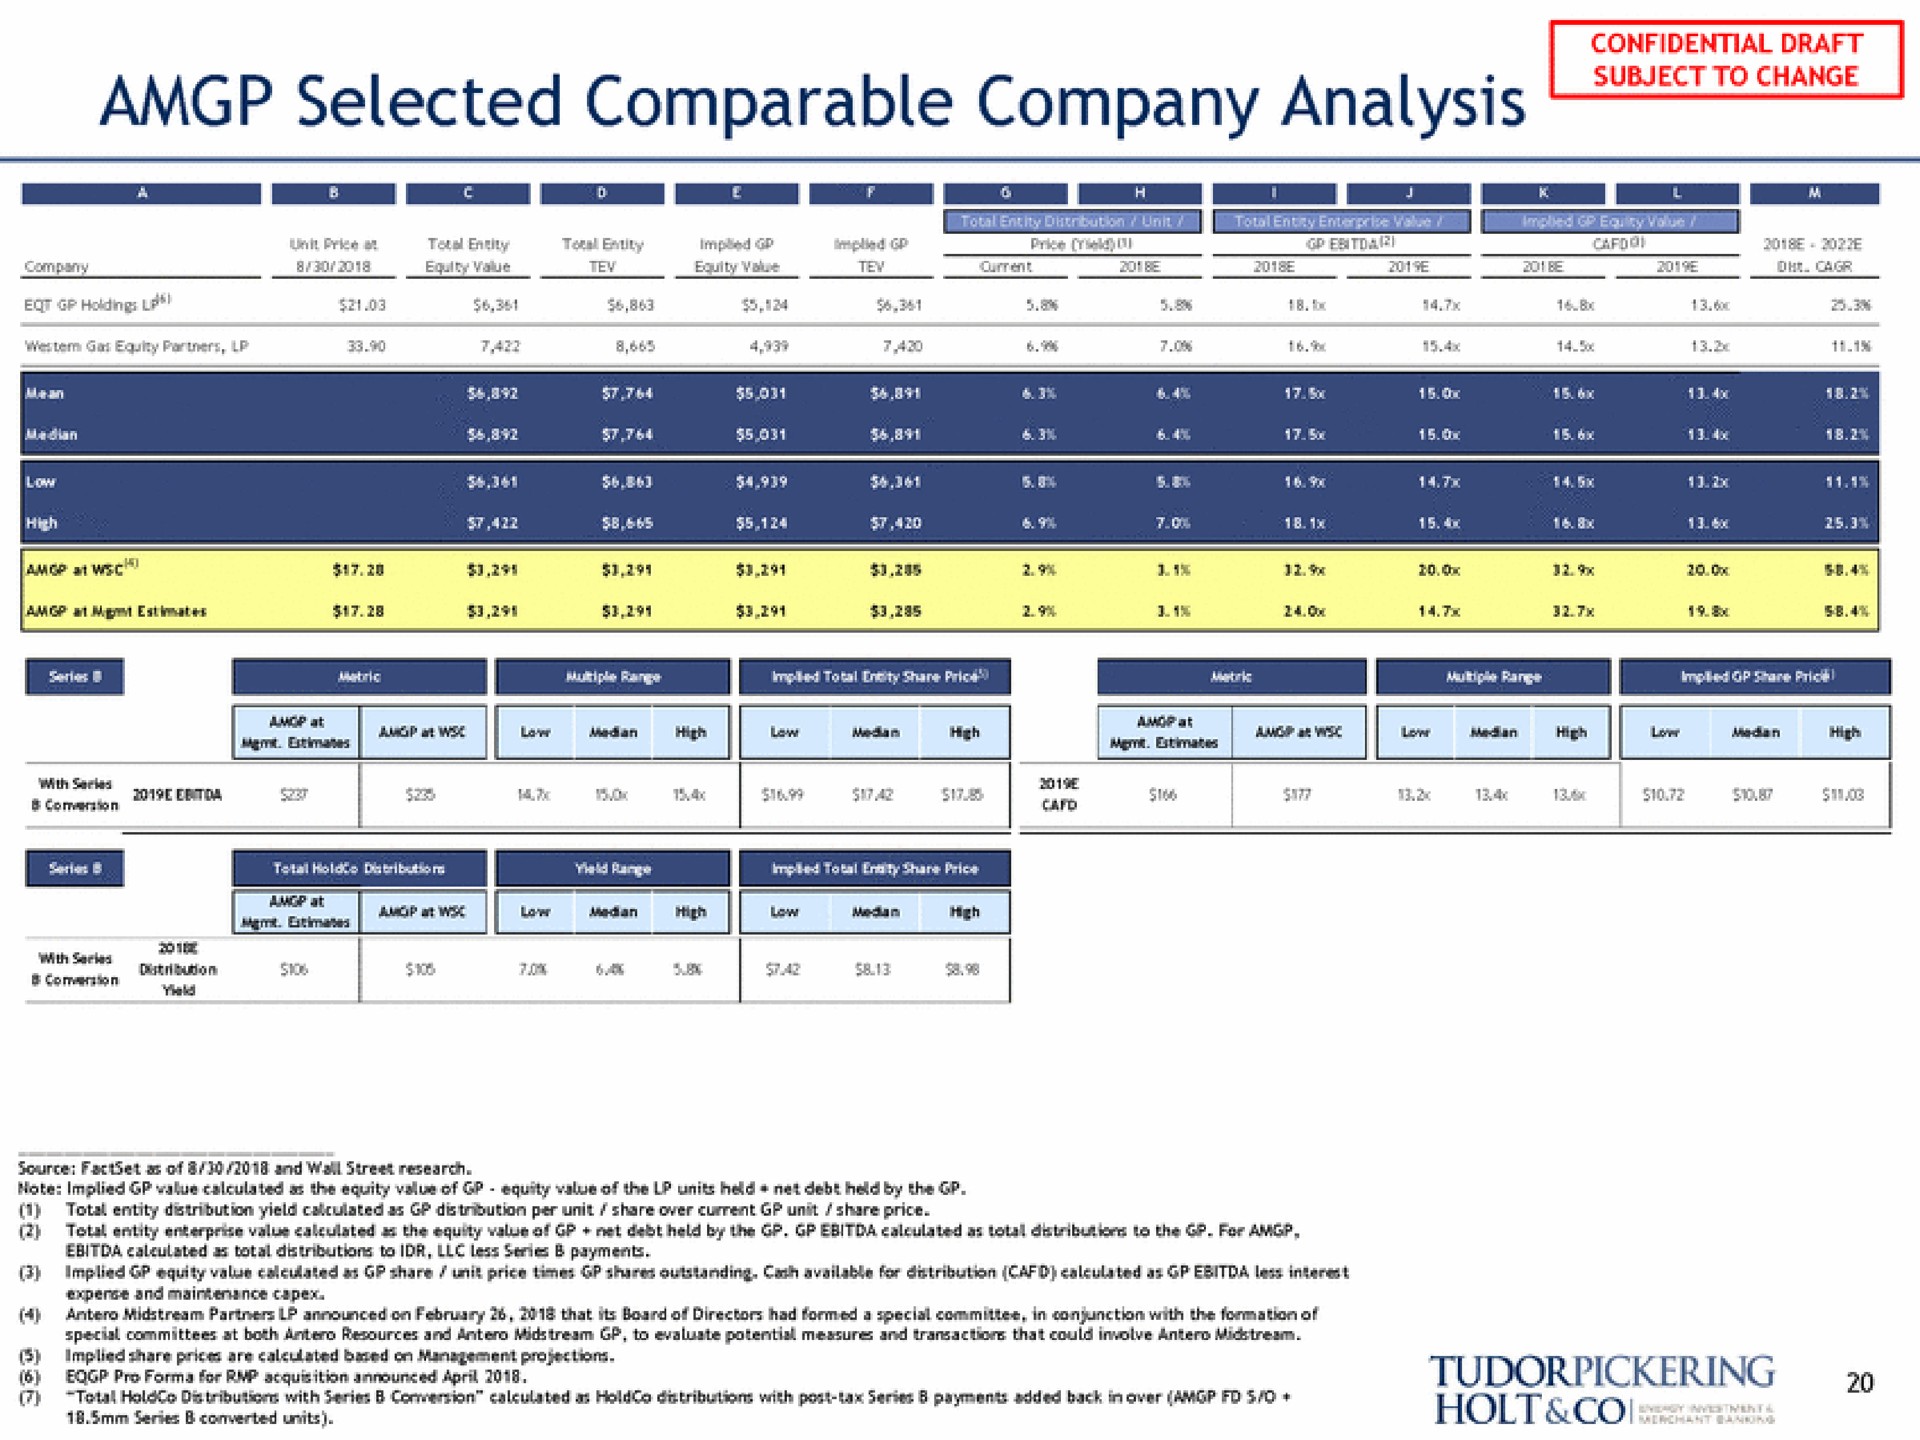 selected company analysis a | Tudor, Pickering, Holt & Co